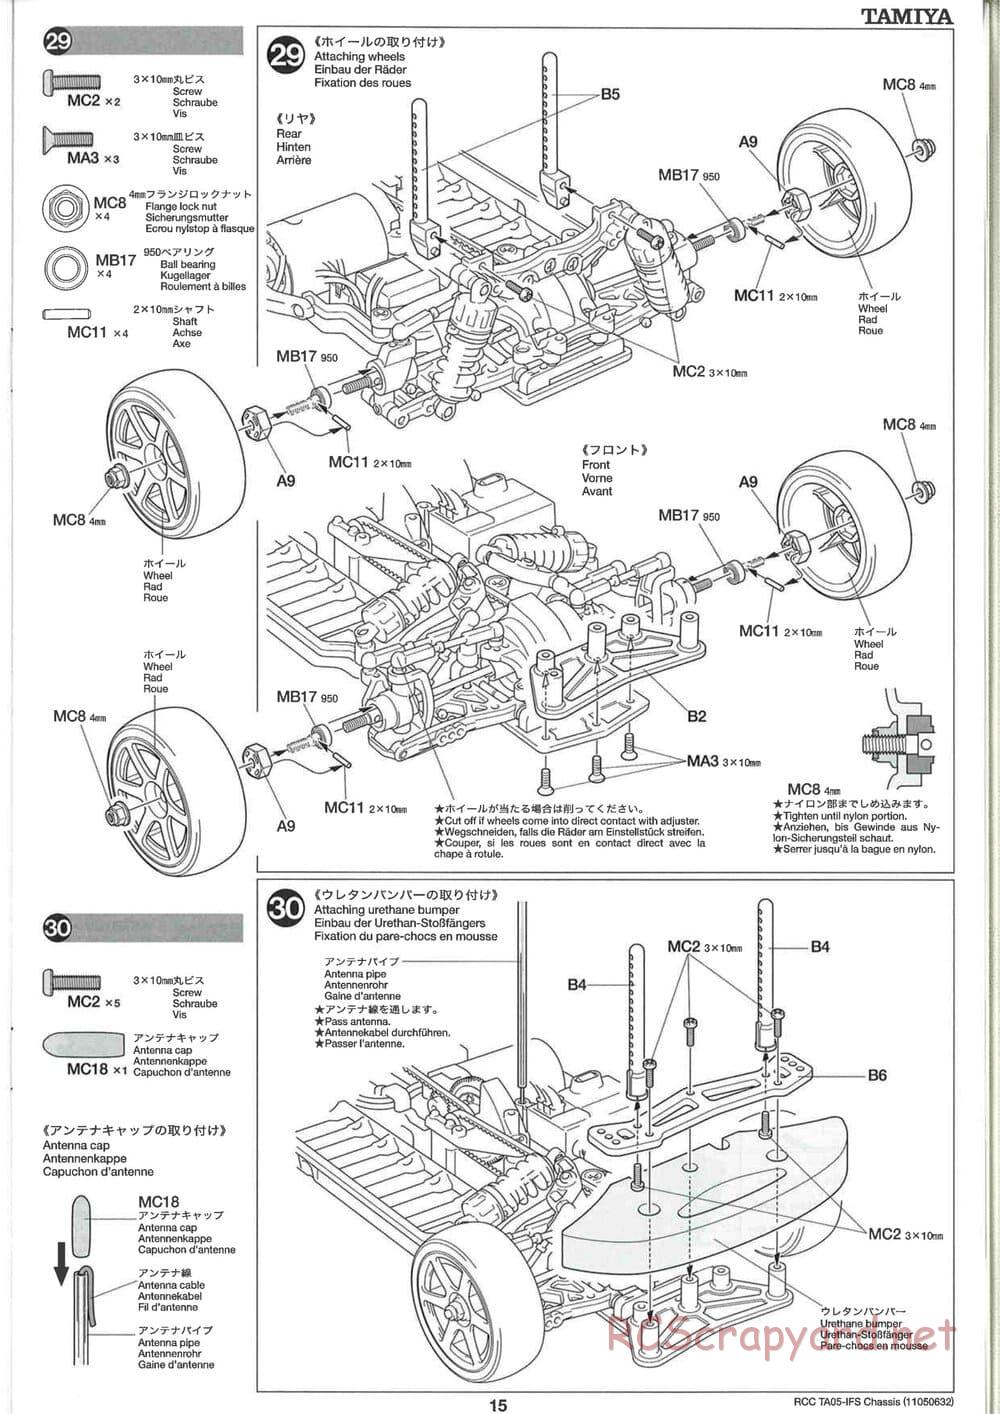 Tamiya - TA05-IFS Chassis - Manual - Page 15